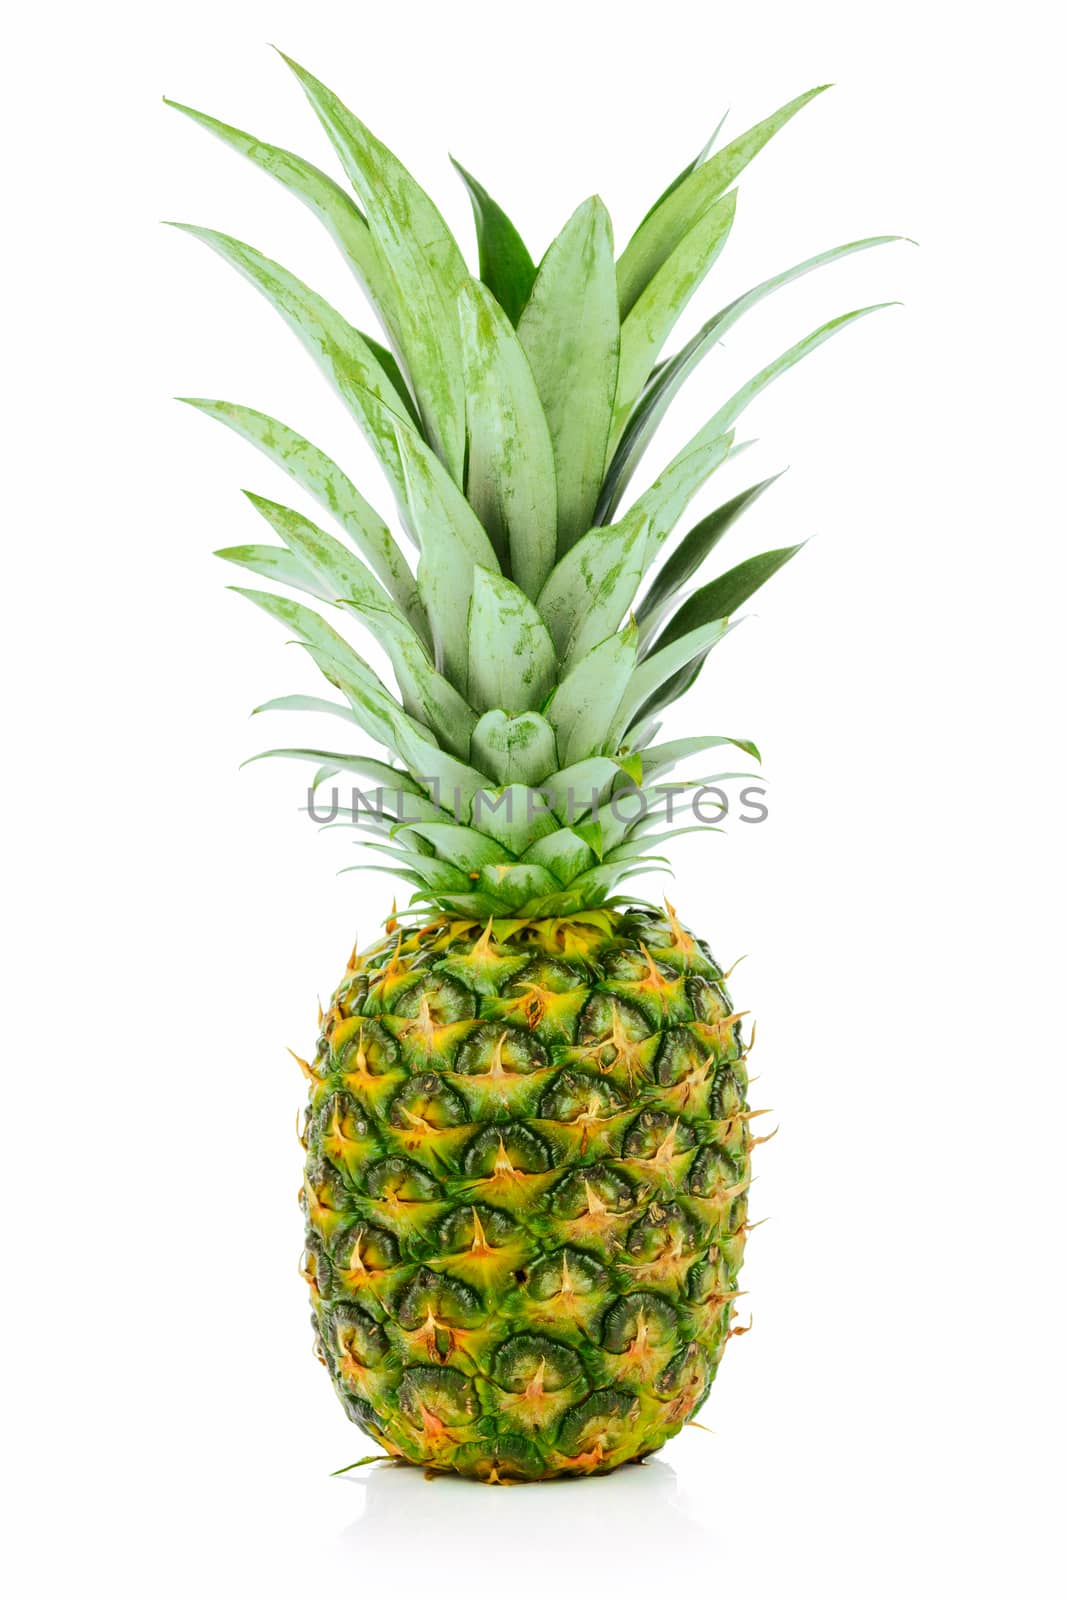 Big whole pineapple fruit by wdnet_studio